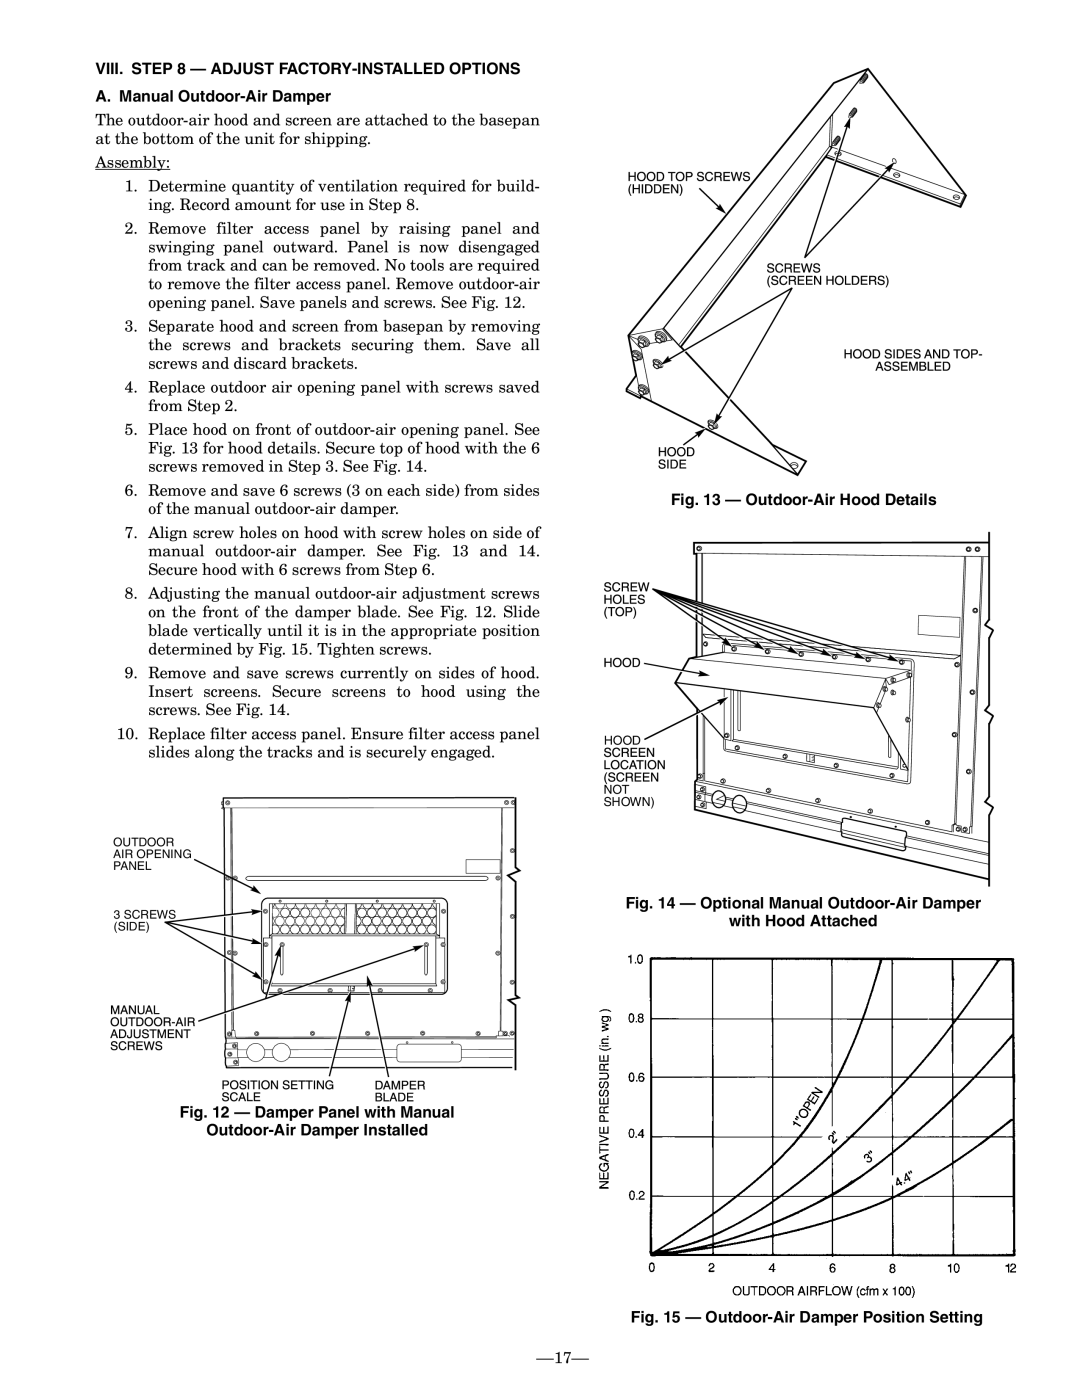 Bryant 580F Viii. — Adjust Factory-Installedoptions, A. Manual Outdoor-AirDamper, Outdoor-AirHood Details 